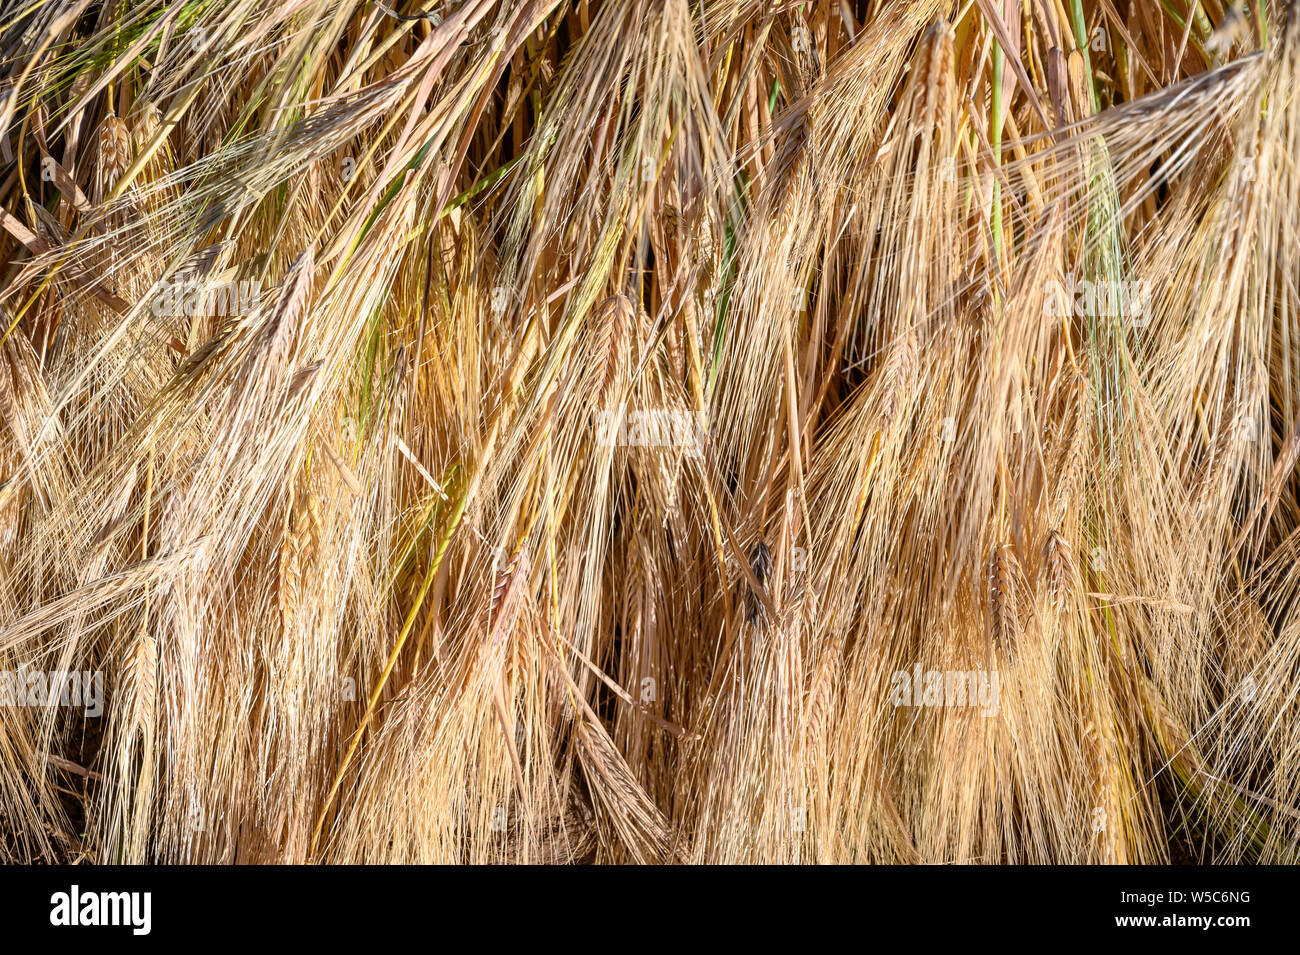 Barley harvest near Ankober, Ethiopia Stock Photo